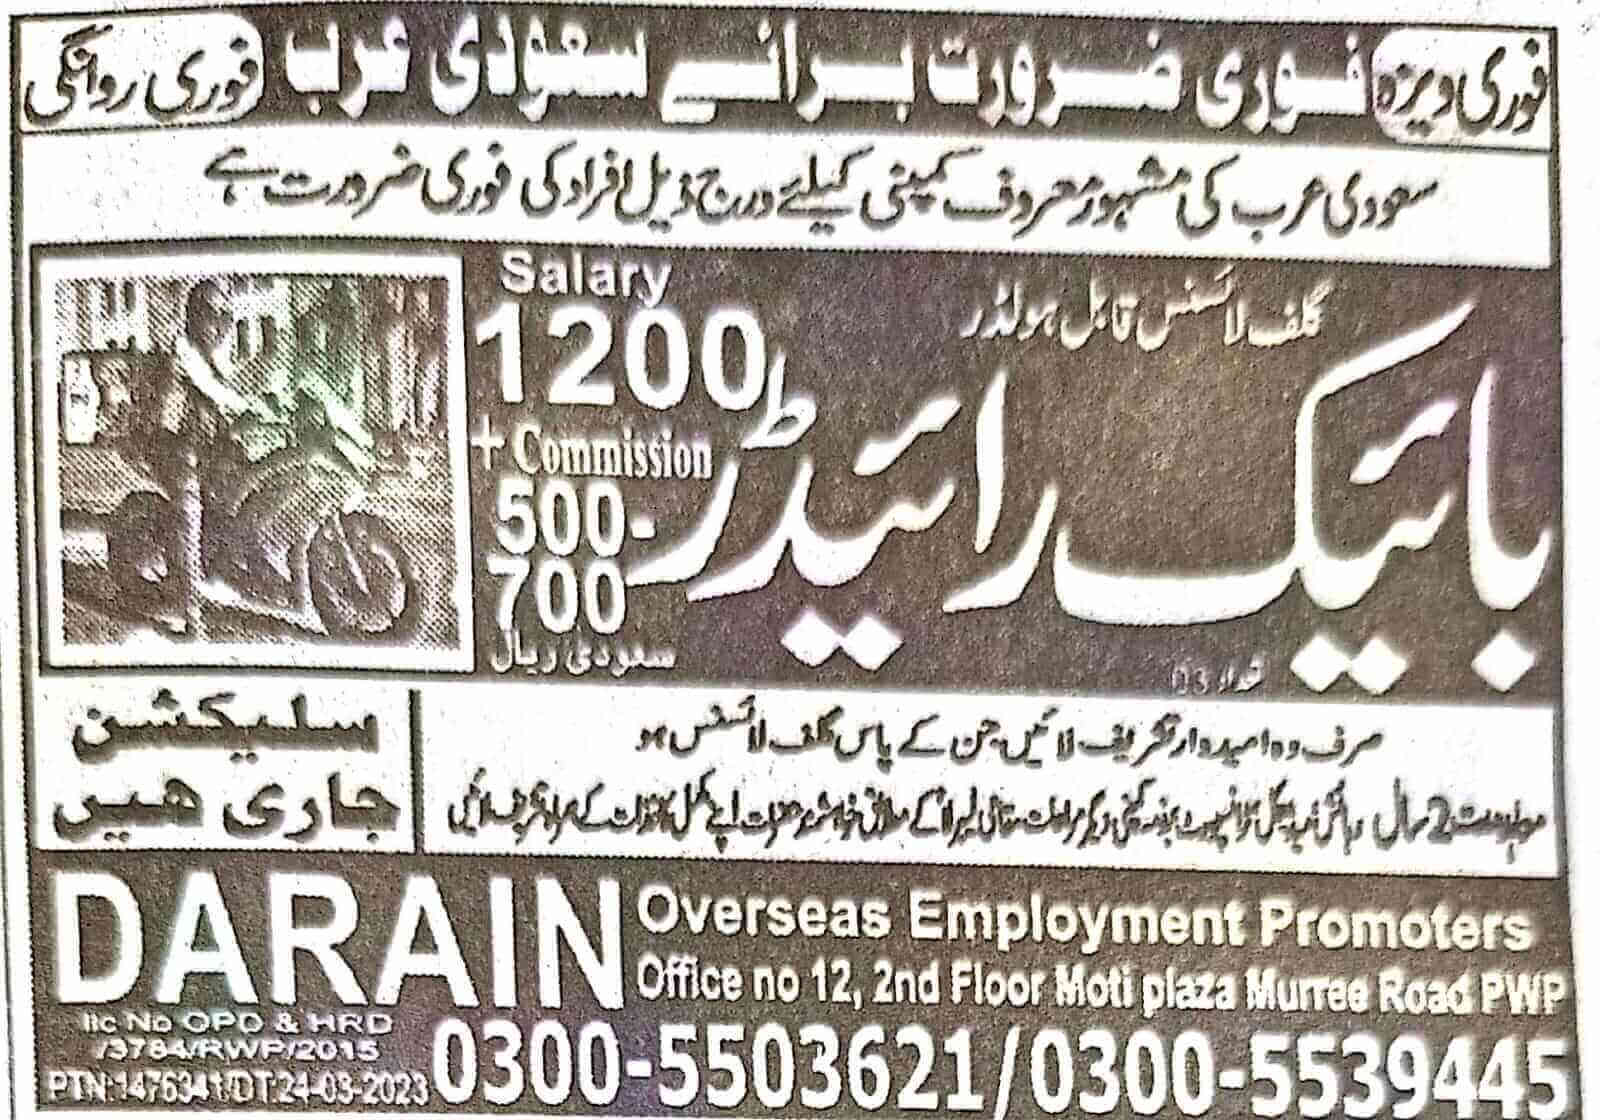 bike rider job in saudi arabia advertisement